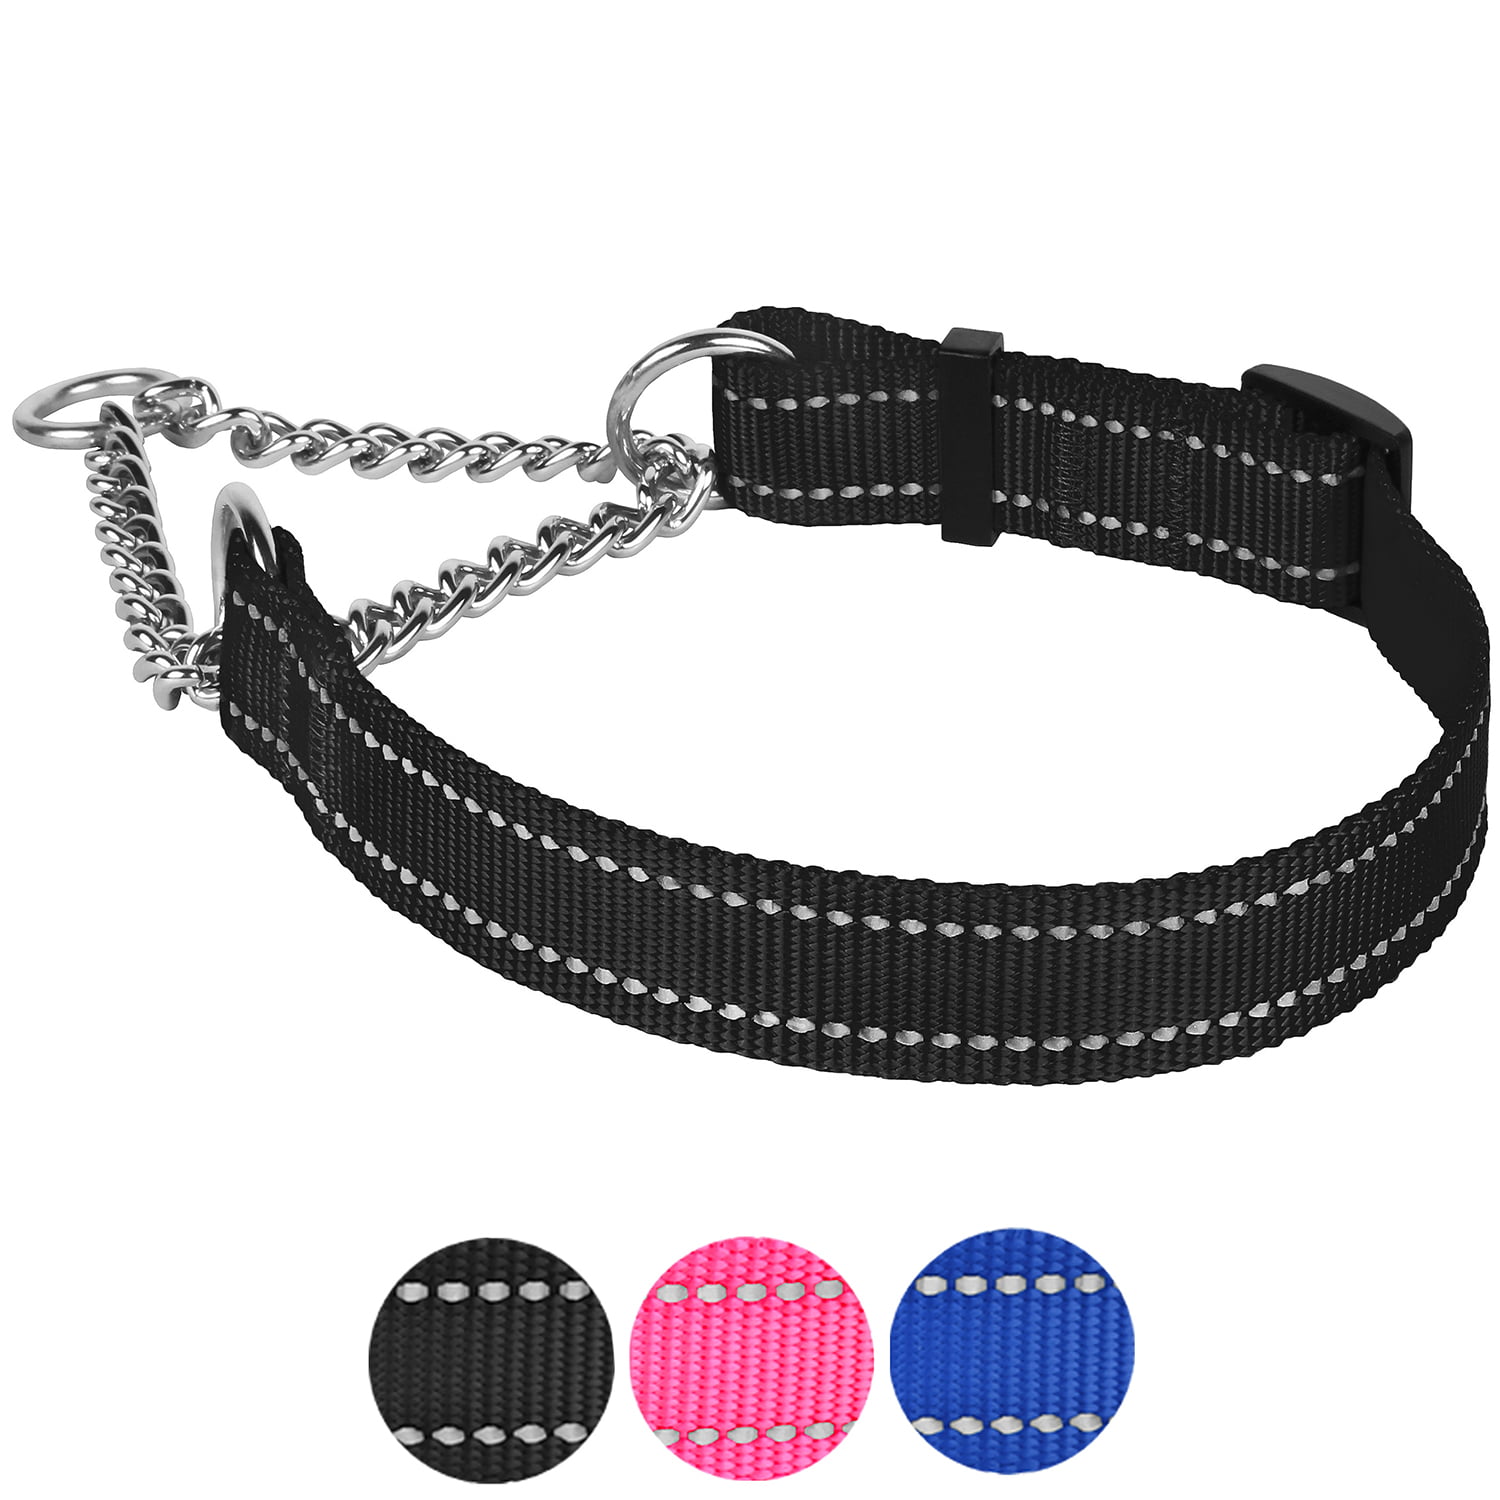 Dog Round Braid Show Leash with choke collar Premium Quality Nylon by Trixie 